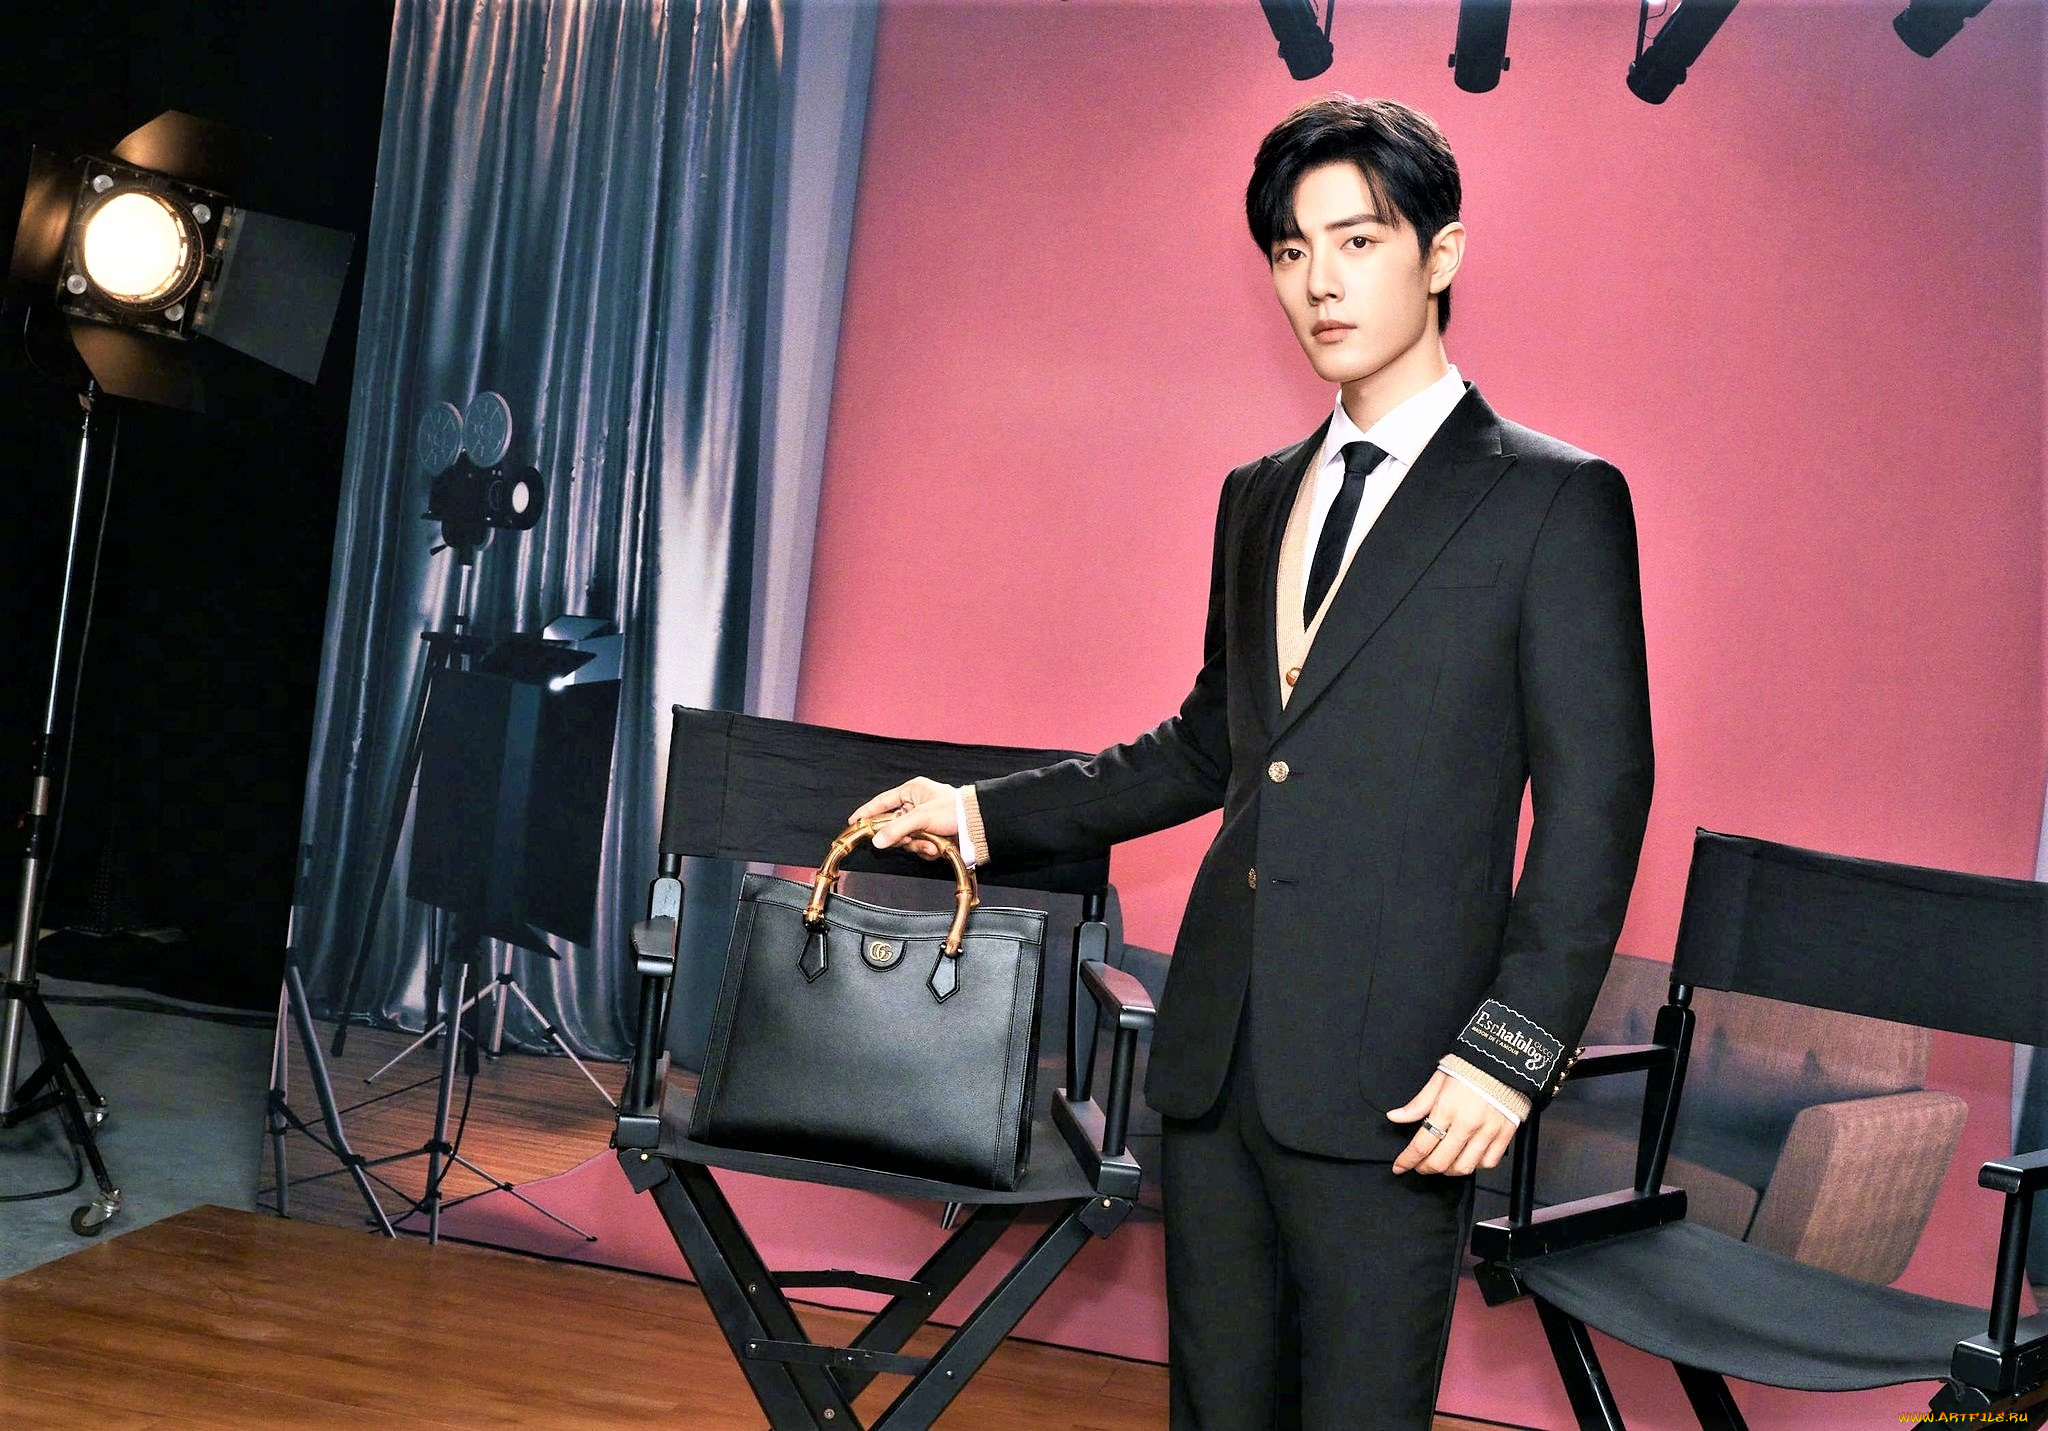 мужчины, xiao, zhan, актер, костюм, сумка, кресла, софит